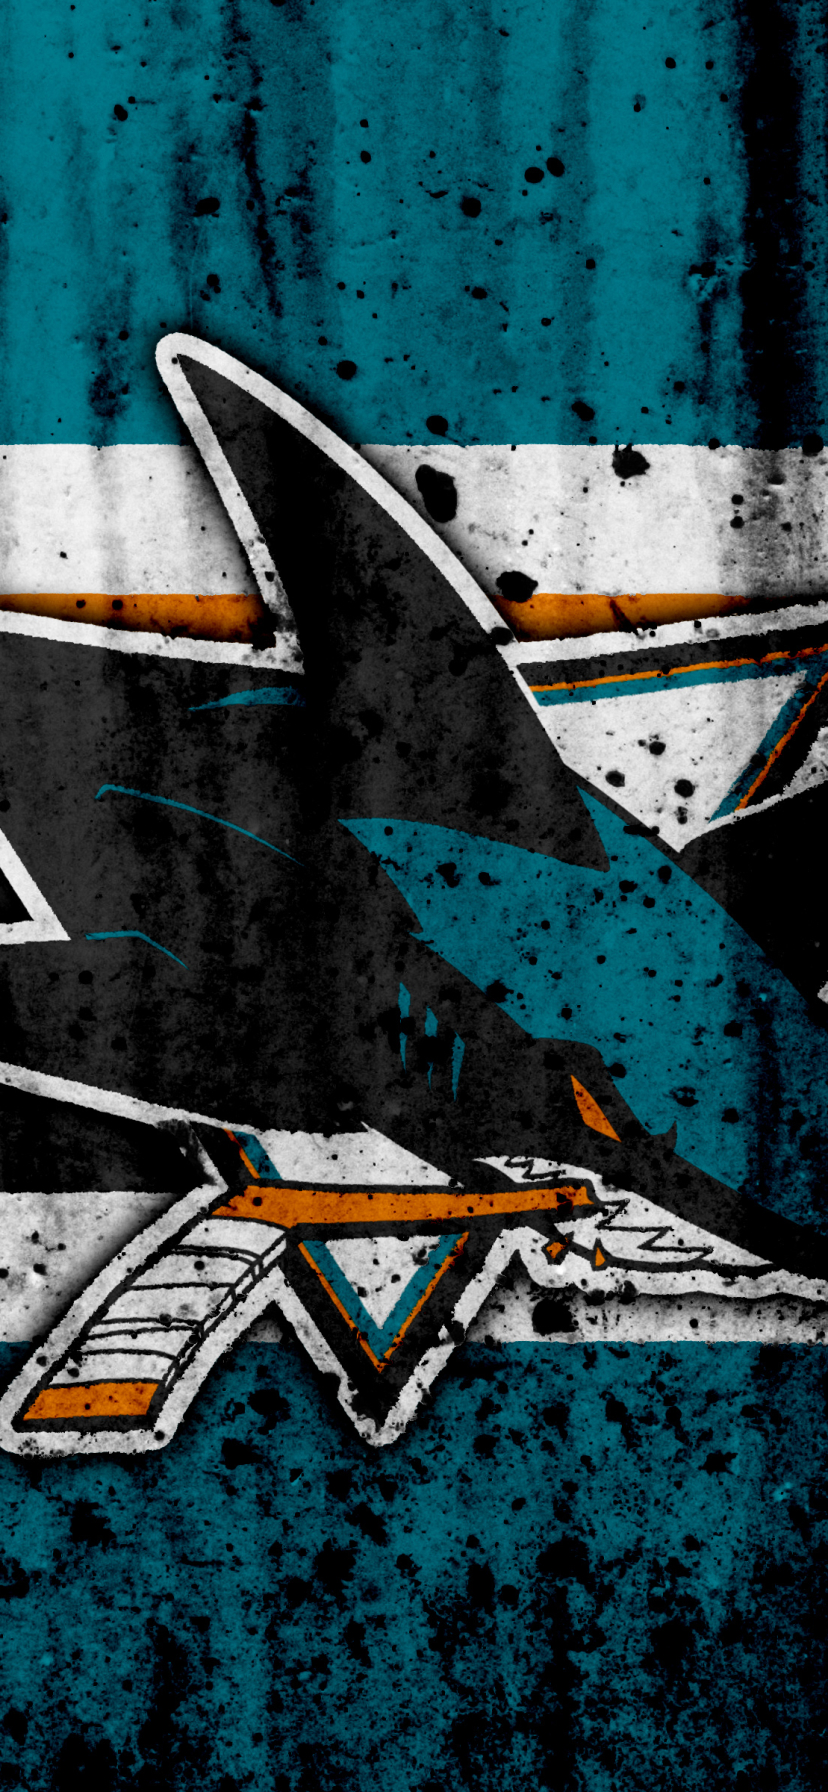 Sports San Jose Sharks 4k Ultra HD Wallpaper